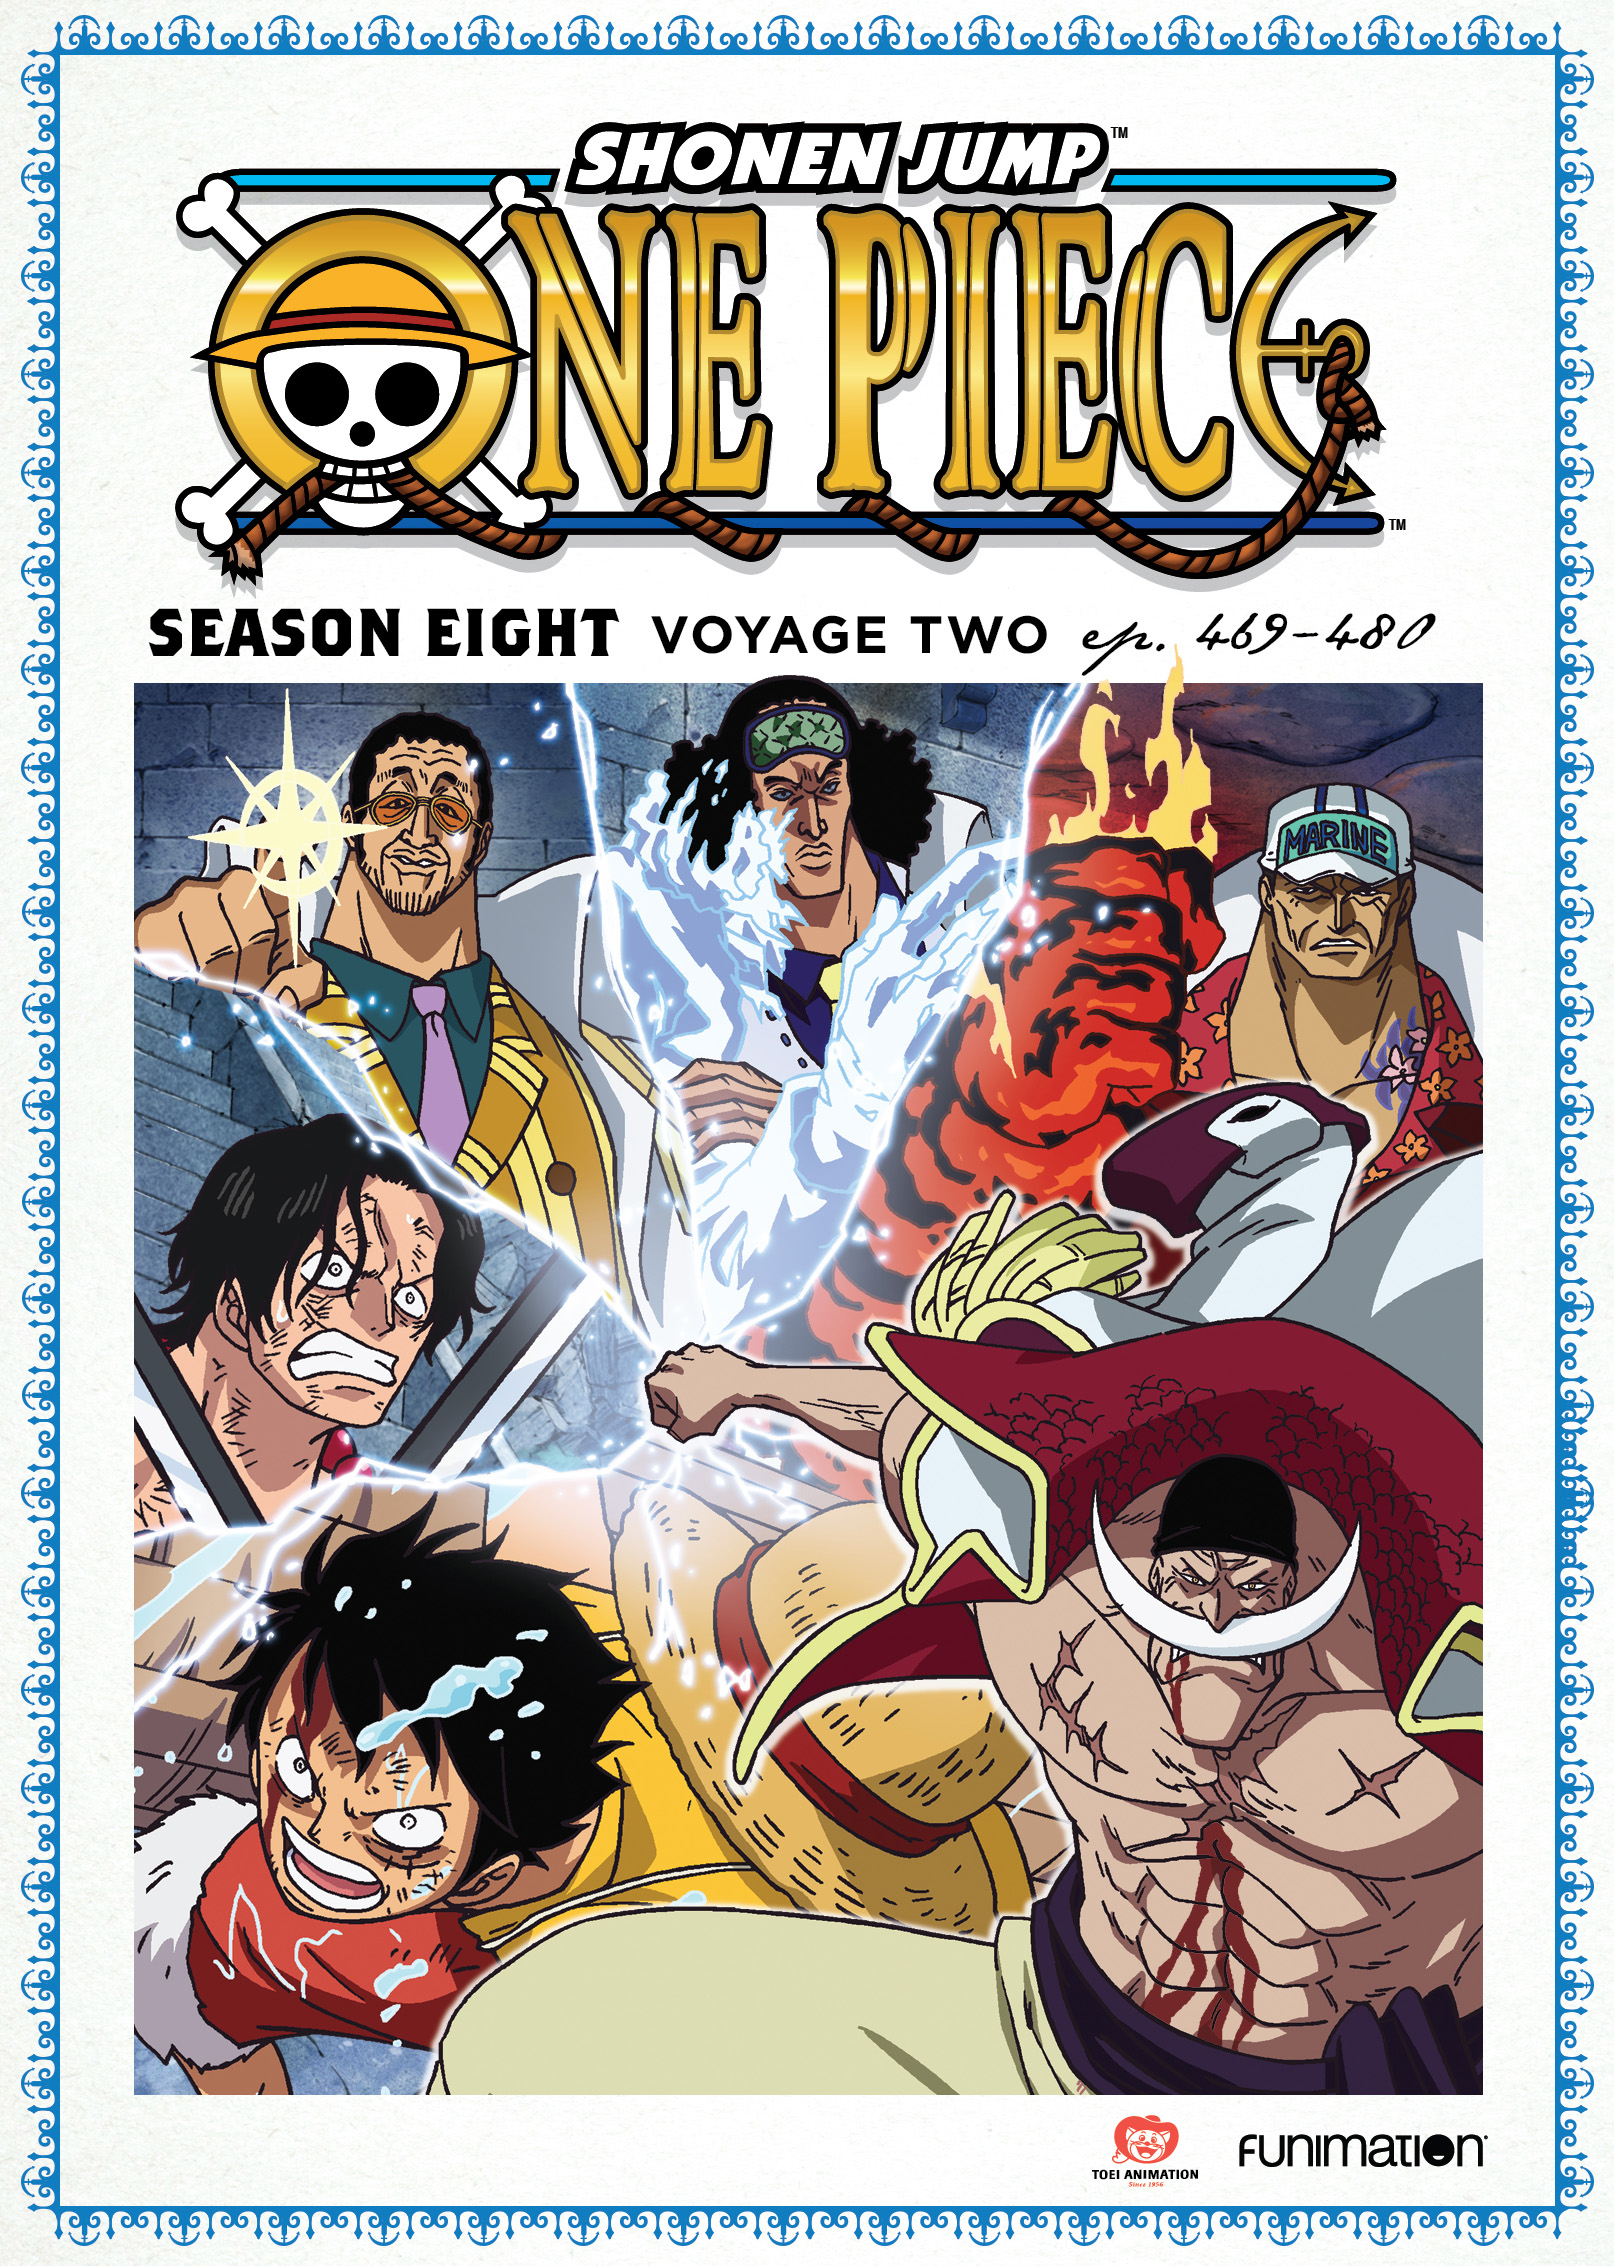 One Piece Season Eight Voyage Two 2 Discs Dvd Best Buy